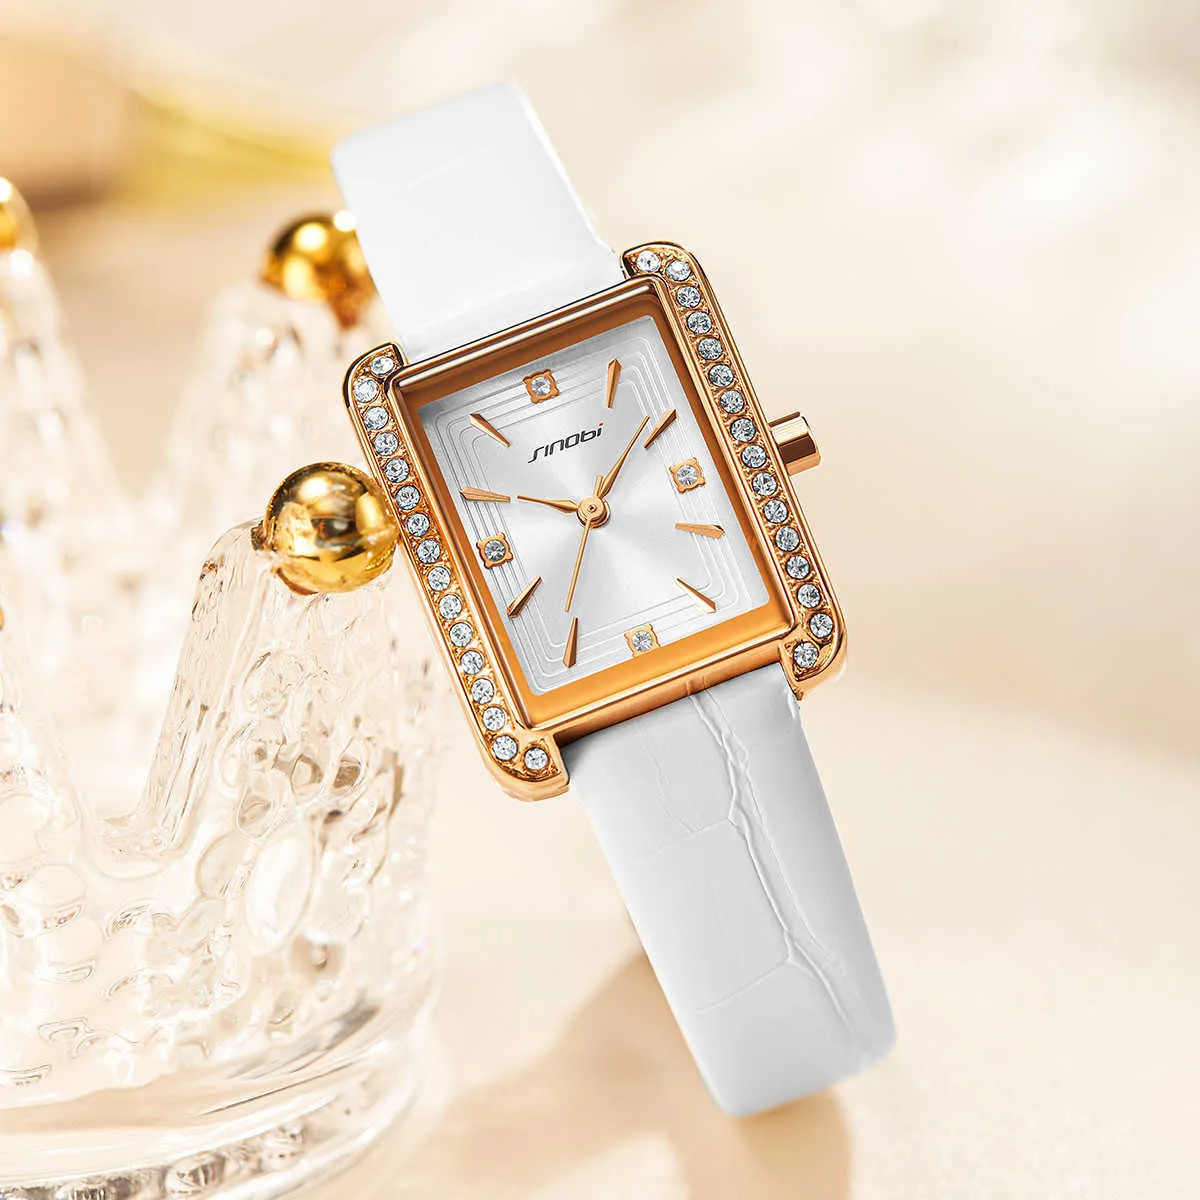 Sinobi 2021 새로운 도착 럭셔리 여성 시계 우아한 직사각형 다이아몬드 방수 손목 시계 시계 몽트르 여성 애호가 선물 Q0524